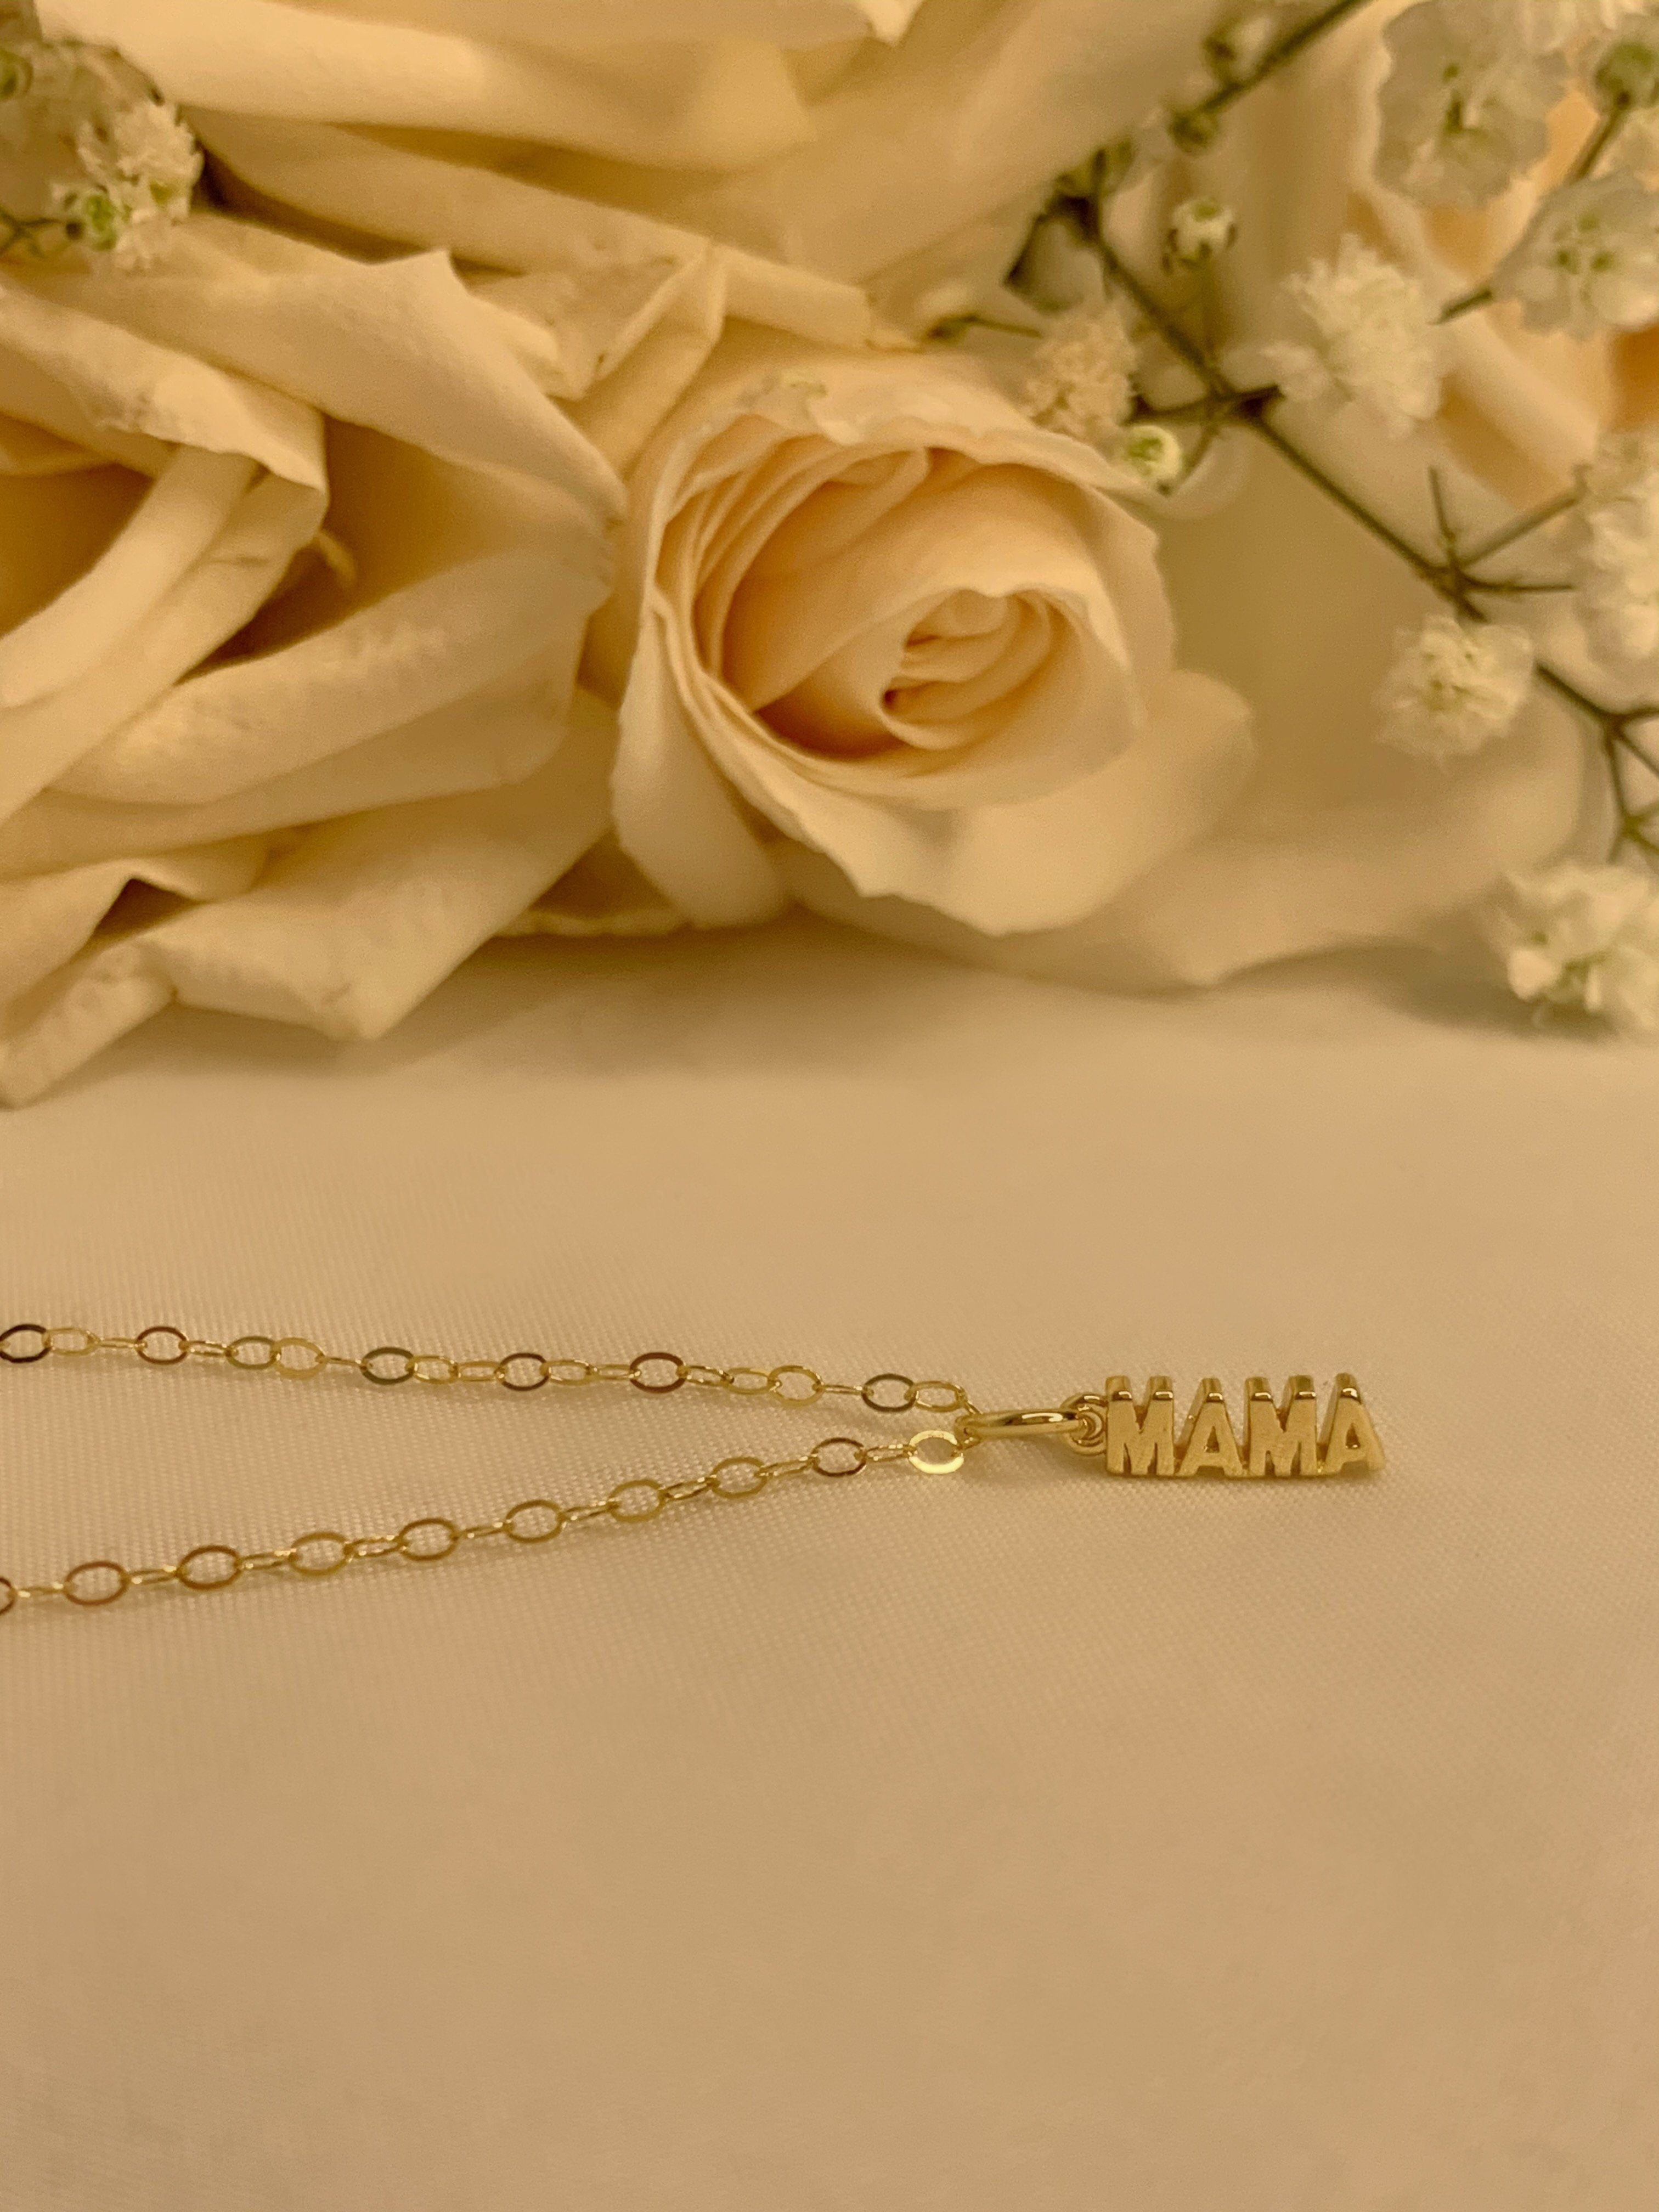 Mama Charm Necklace - Jewelers Garden